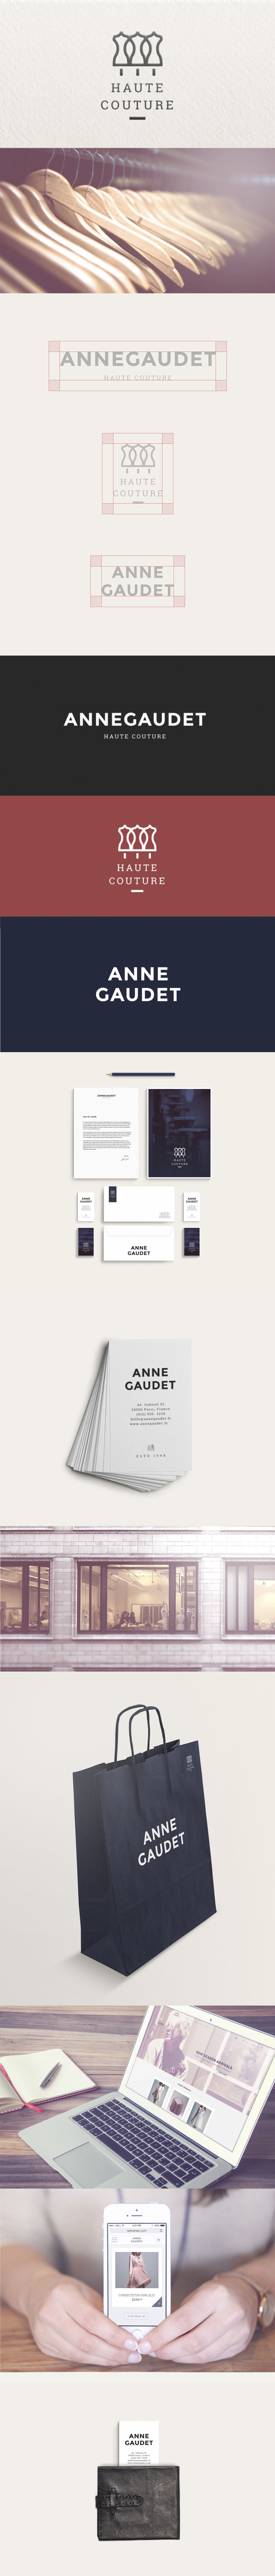 Anne Gaudet - identidad visual 2